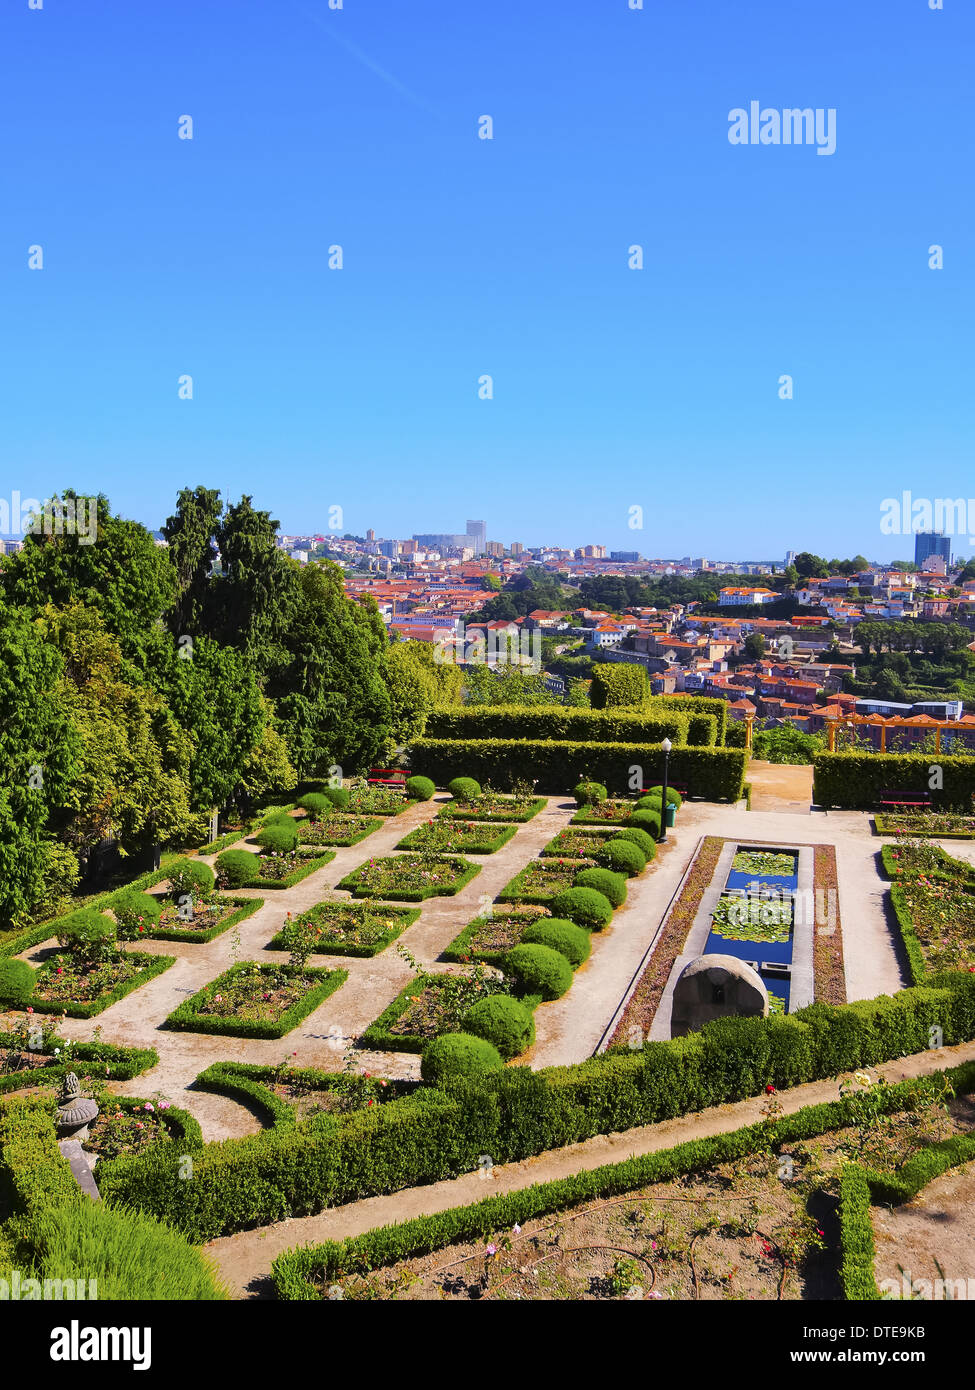 Jardins do Palacio de Cristal - Palacio de Cristal Gardens in Porto, Portugal Stock Photo